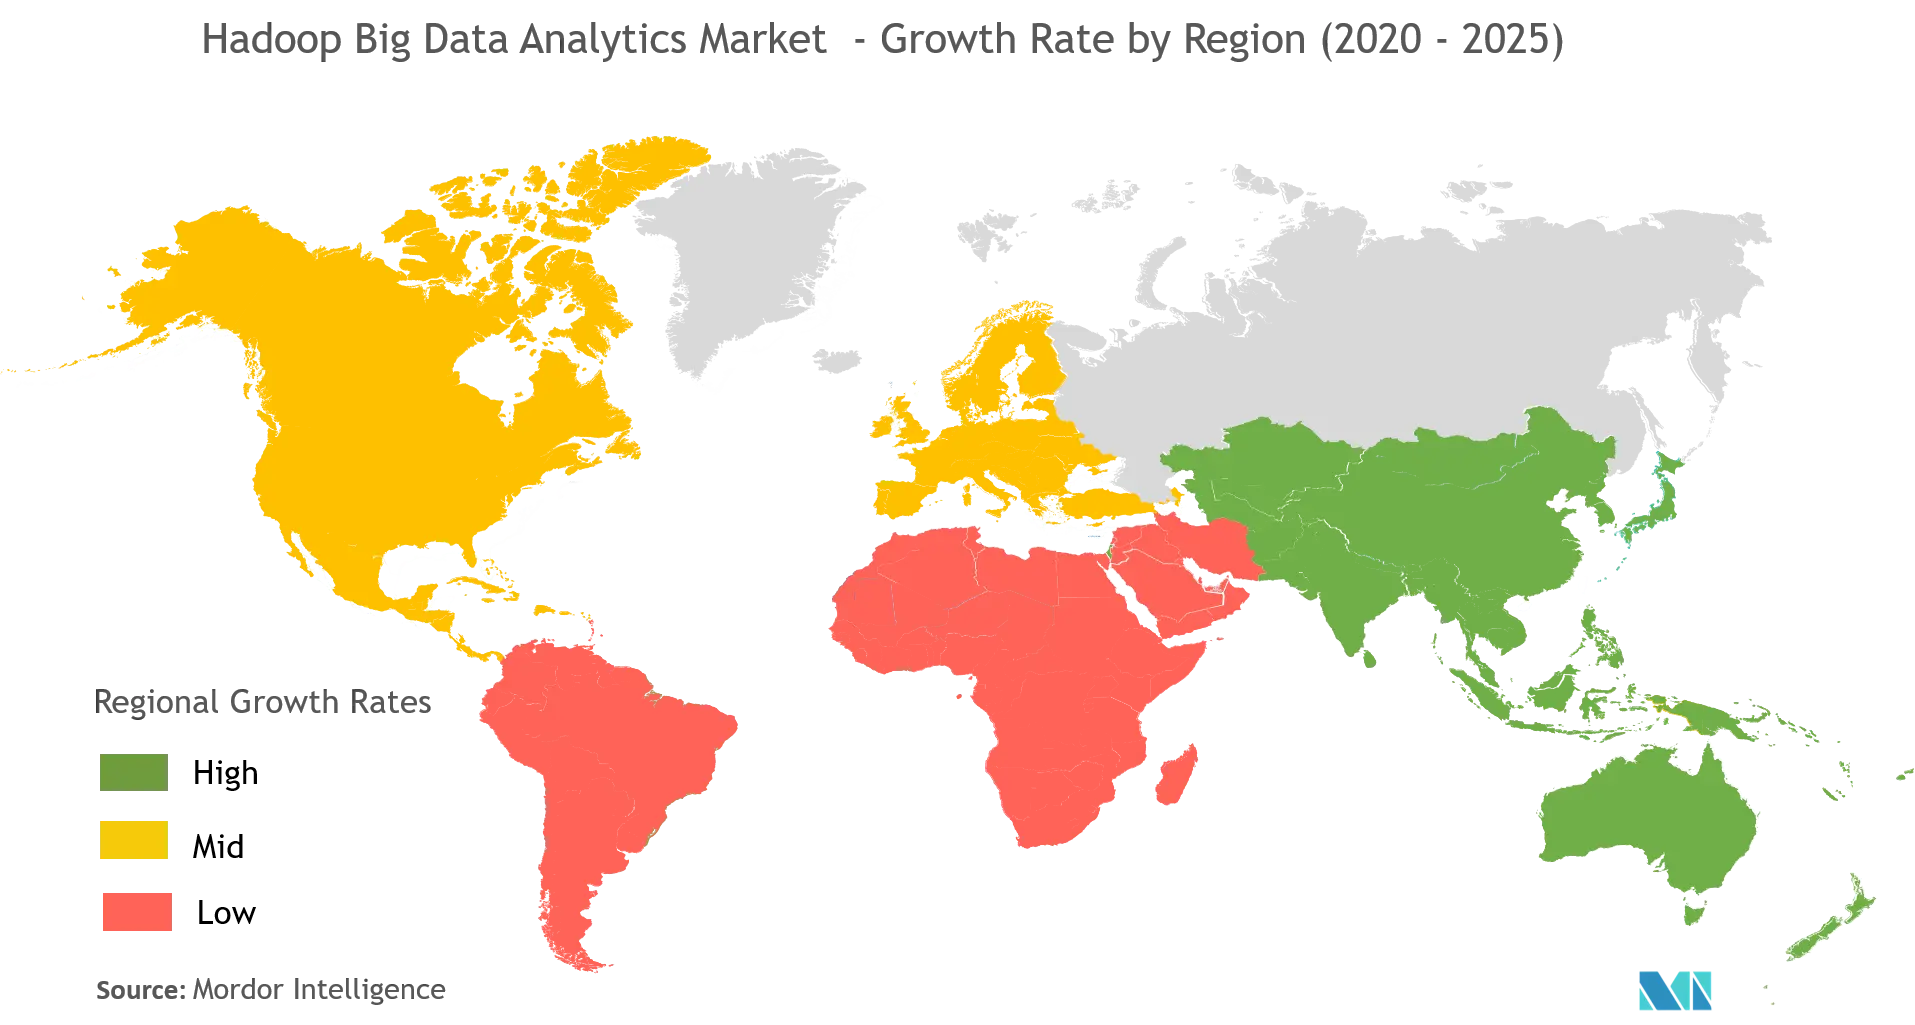 Hadoop Big Data Analytics Market - Growth Rate by Region (2020-2025)